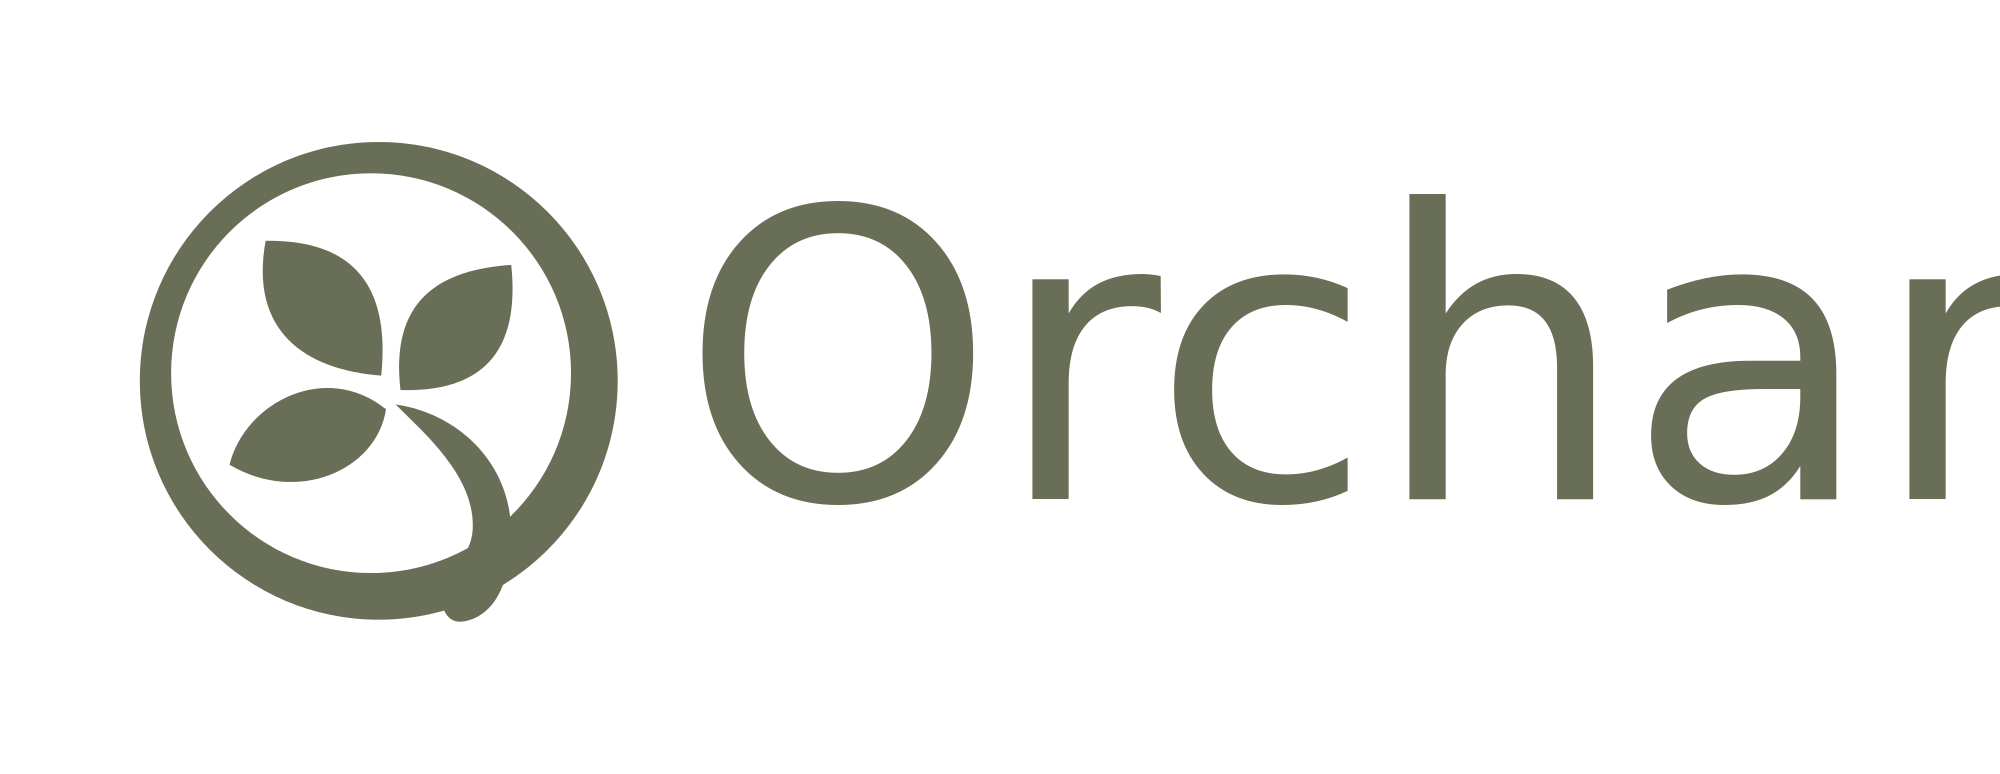 Orchard Logo - File:Orchard logo 3.svg - Wikimedia Commons